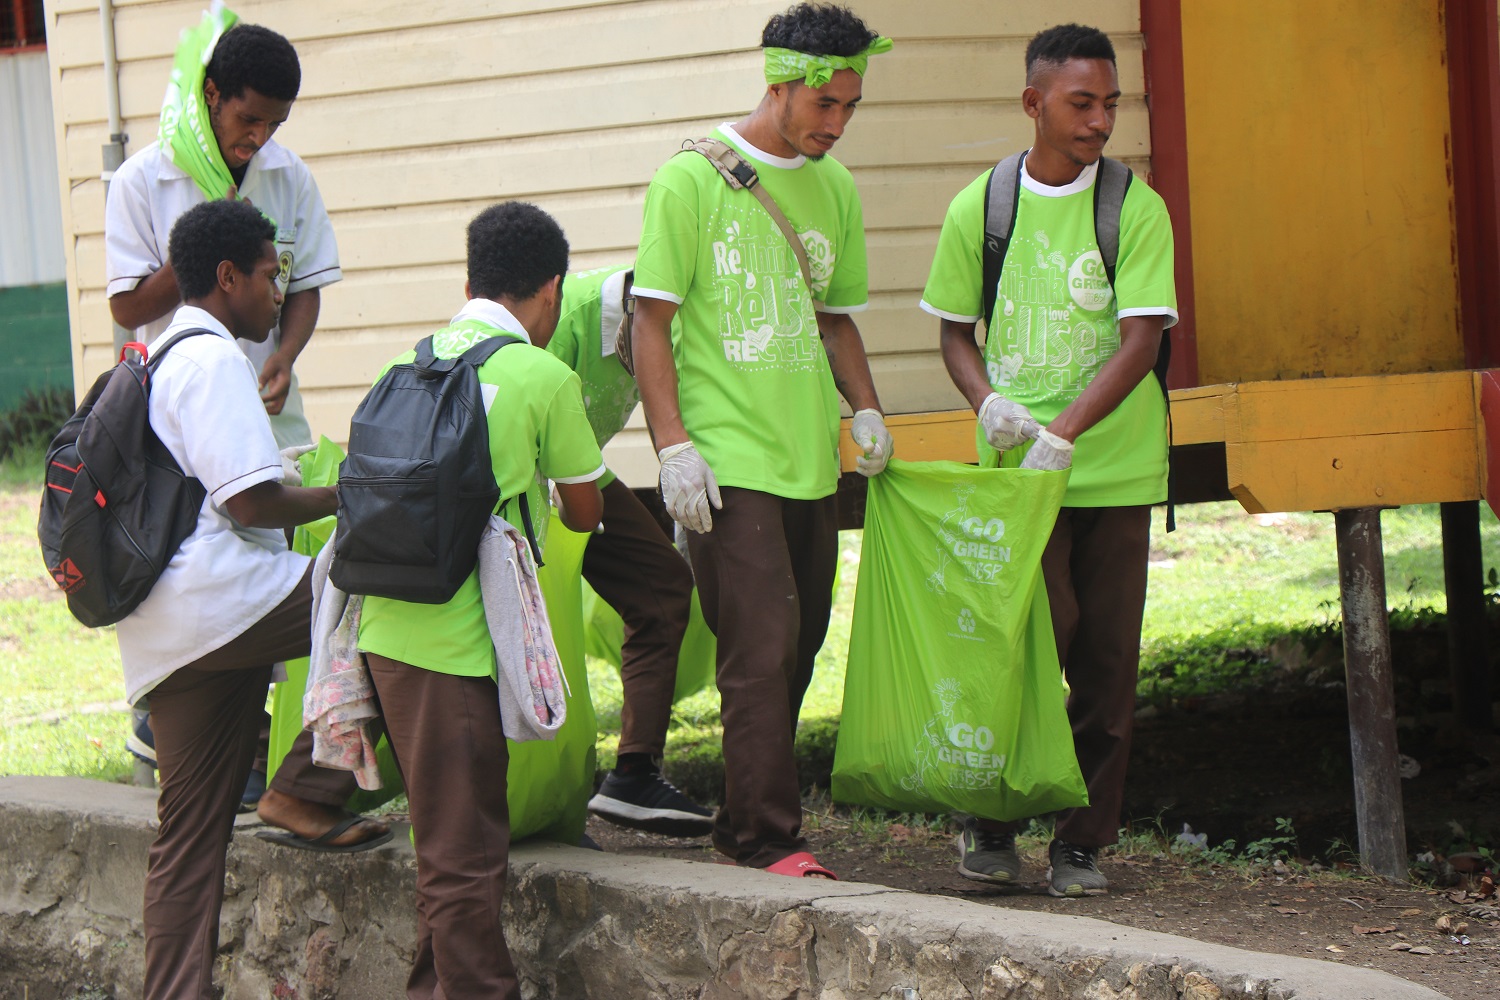 Badihagwa Primary School students in BSP Go Green clean-up